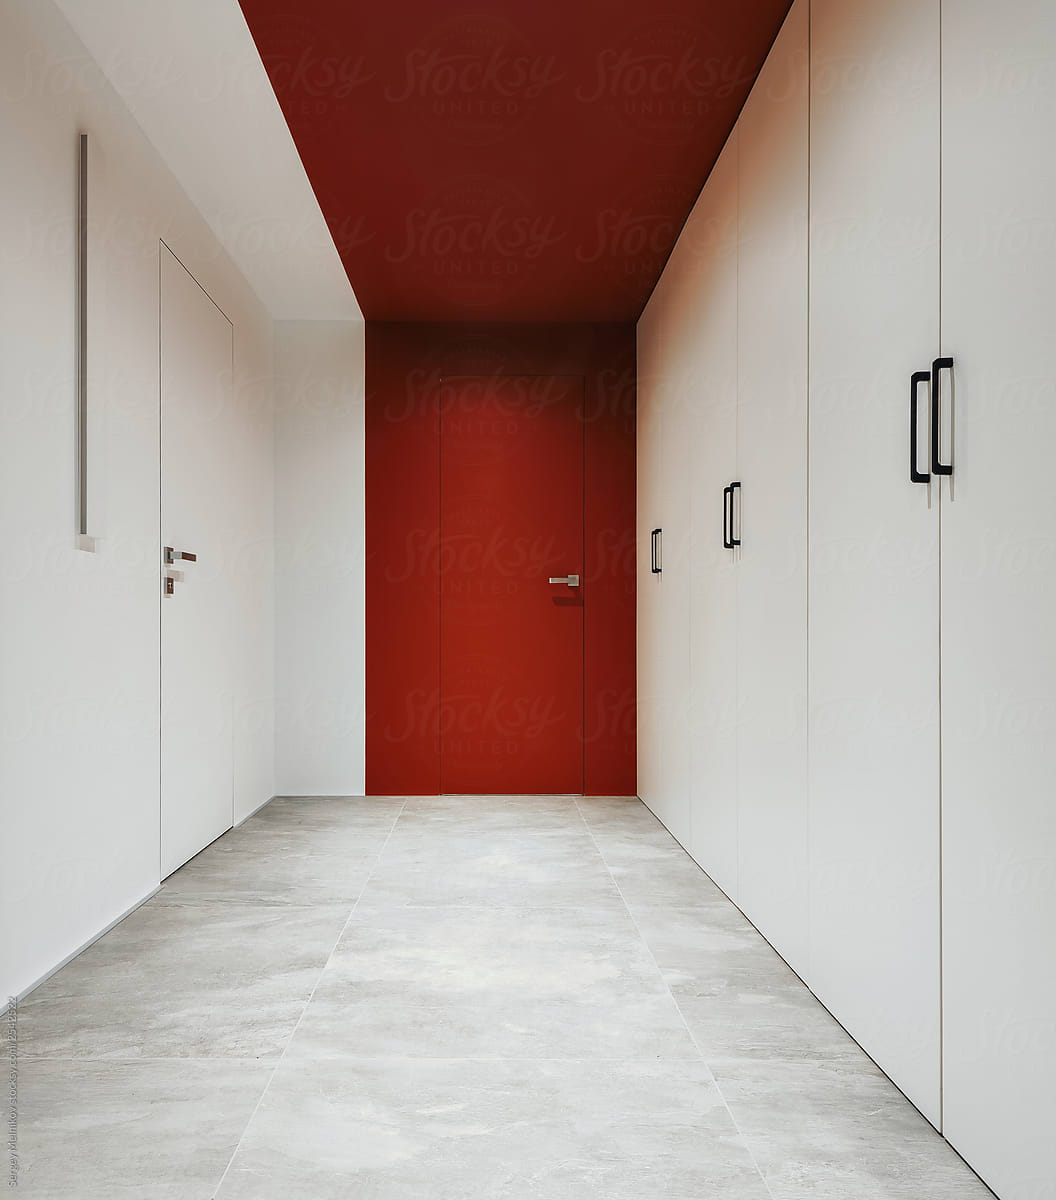 Corridor of modern building